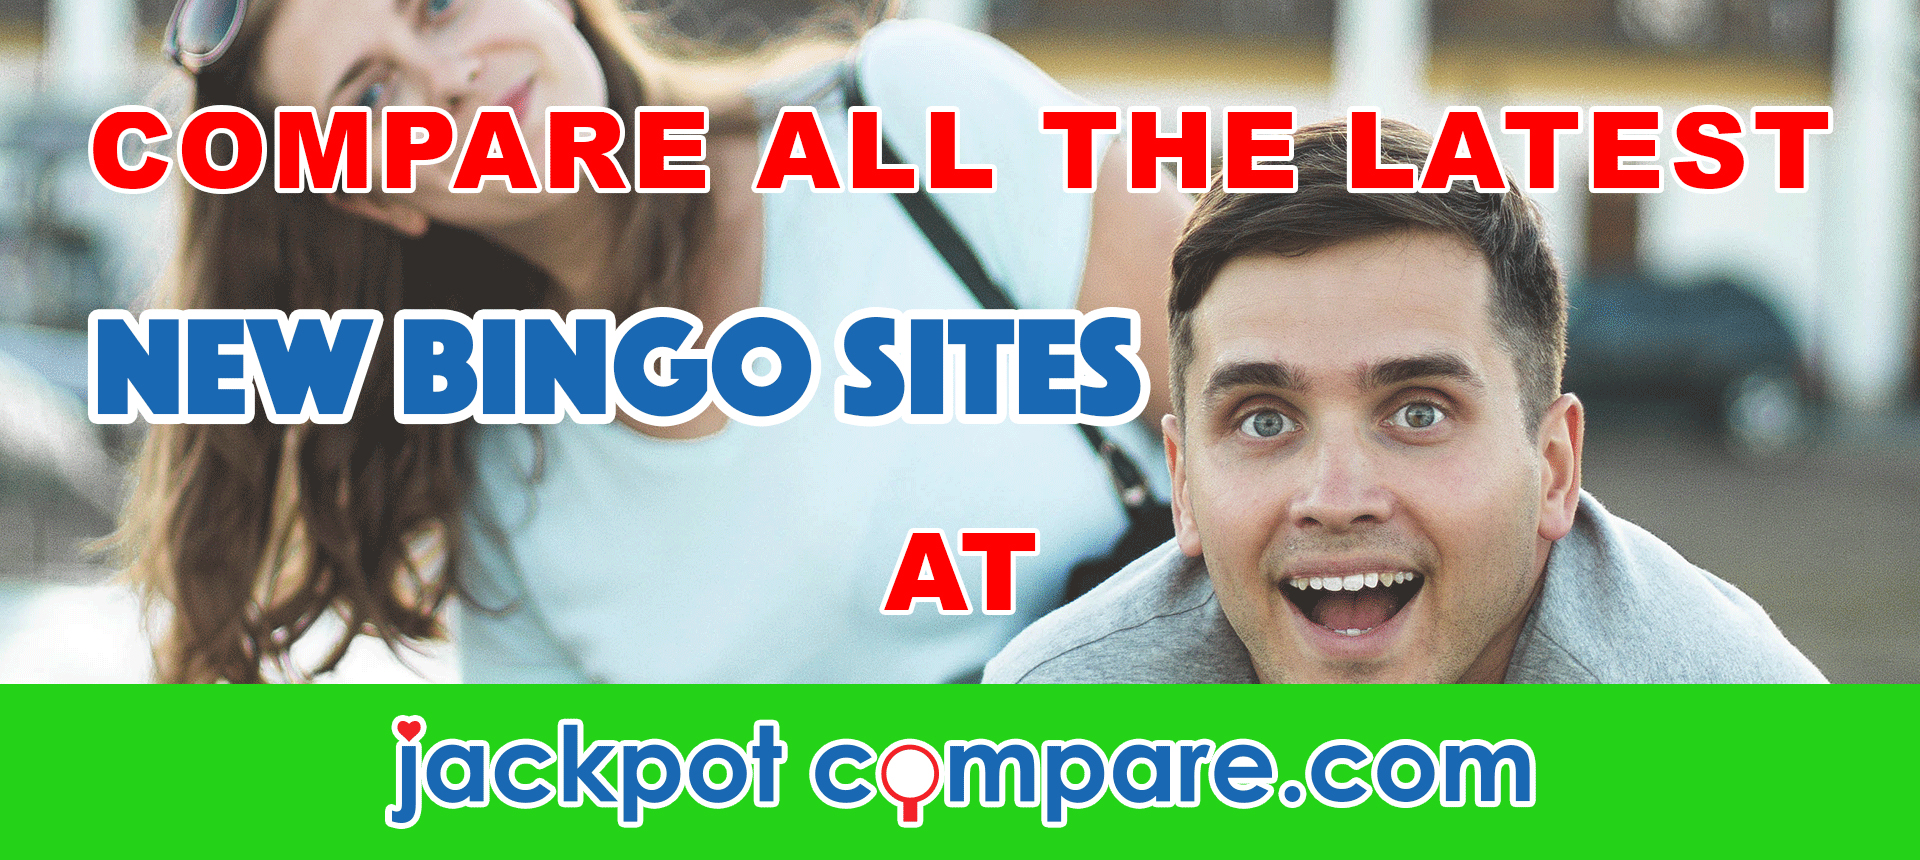 new bingo sites banner advertisement 03